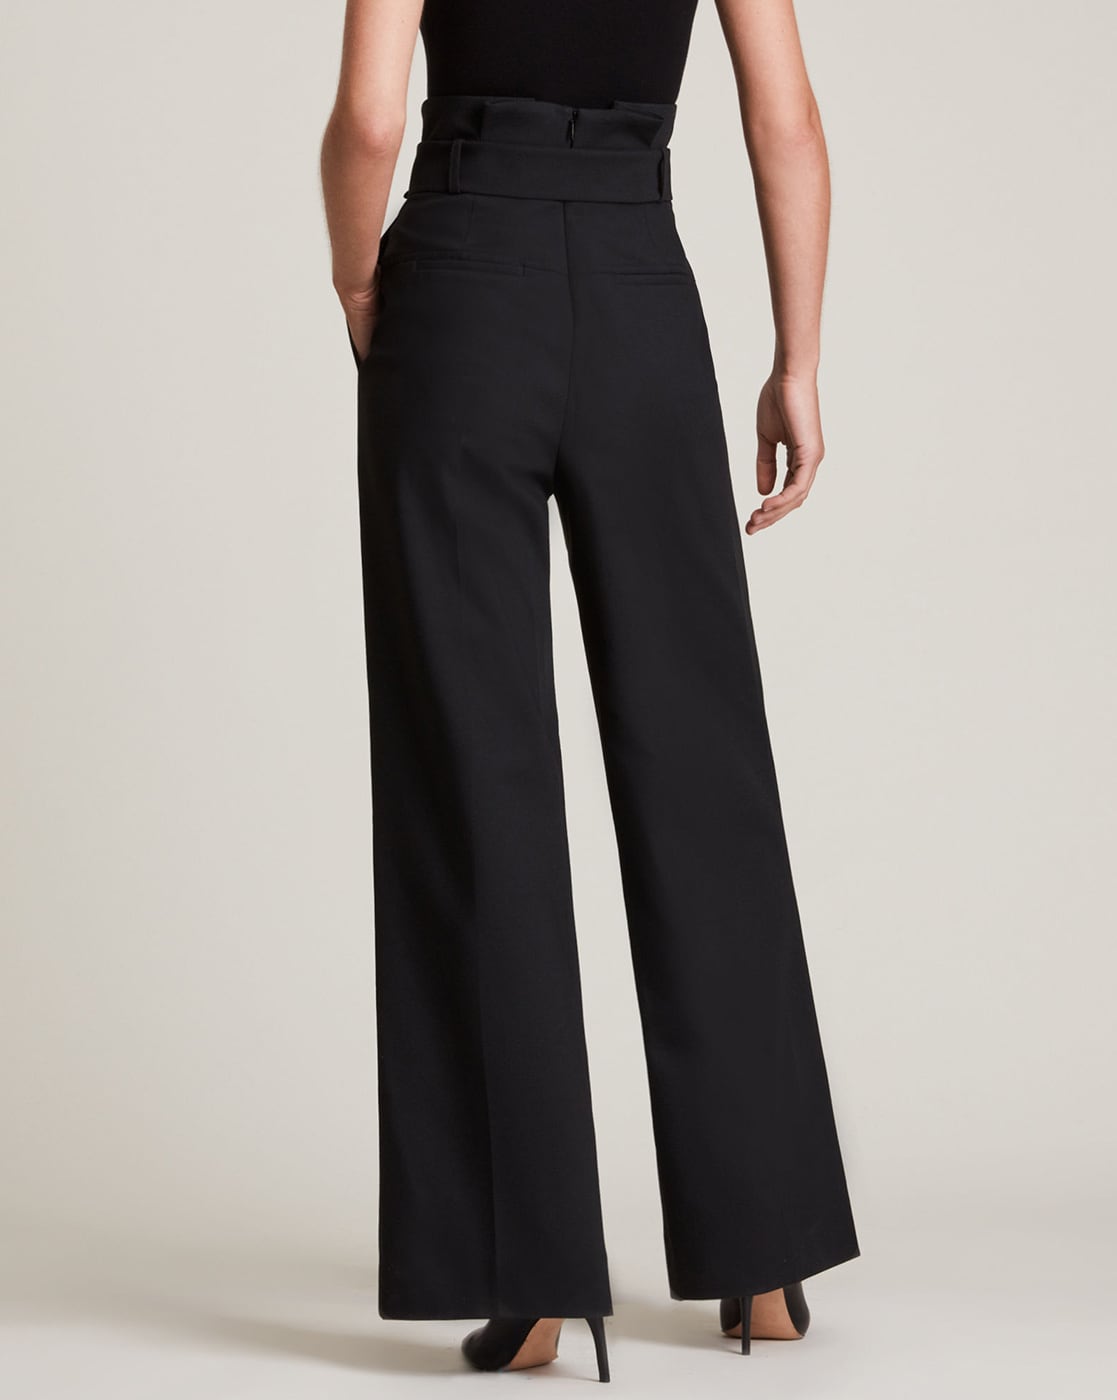 high-rise waist REYA double pleat trousers